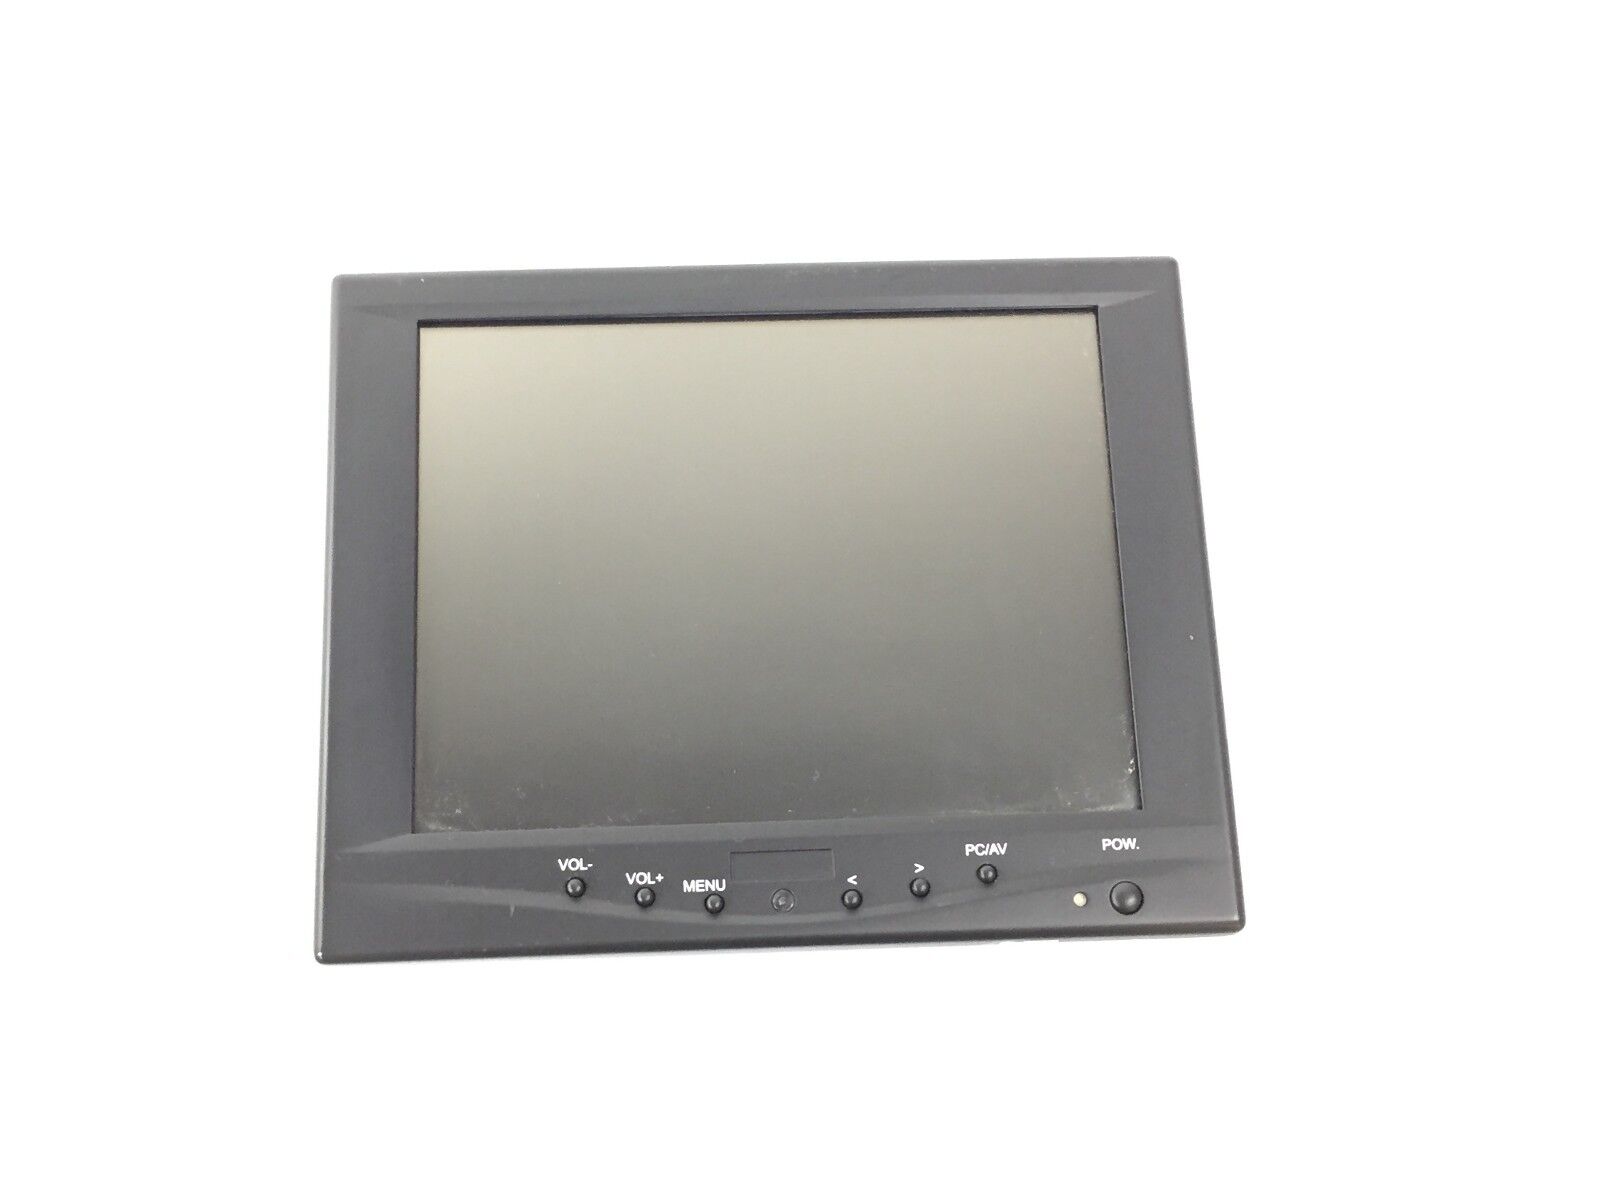 Magtek ExpressCard 1000 8" LCD Display